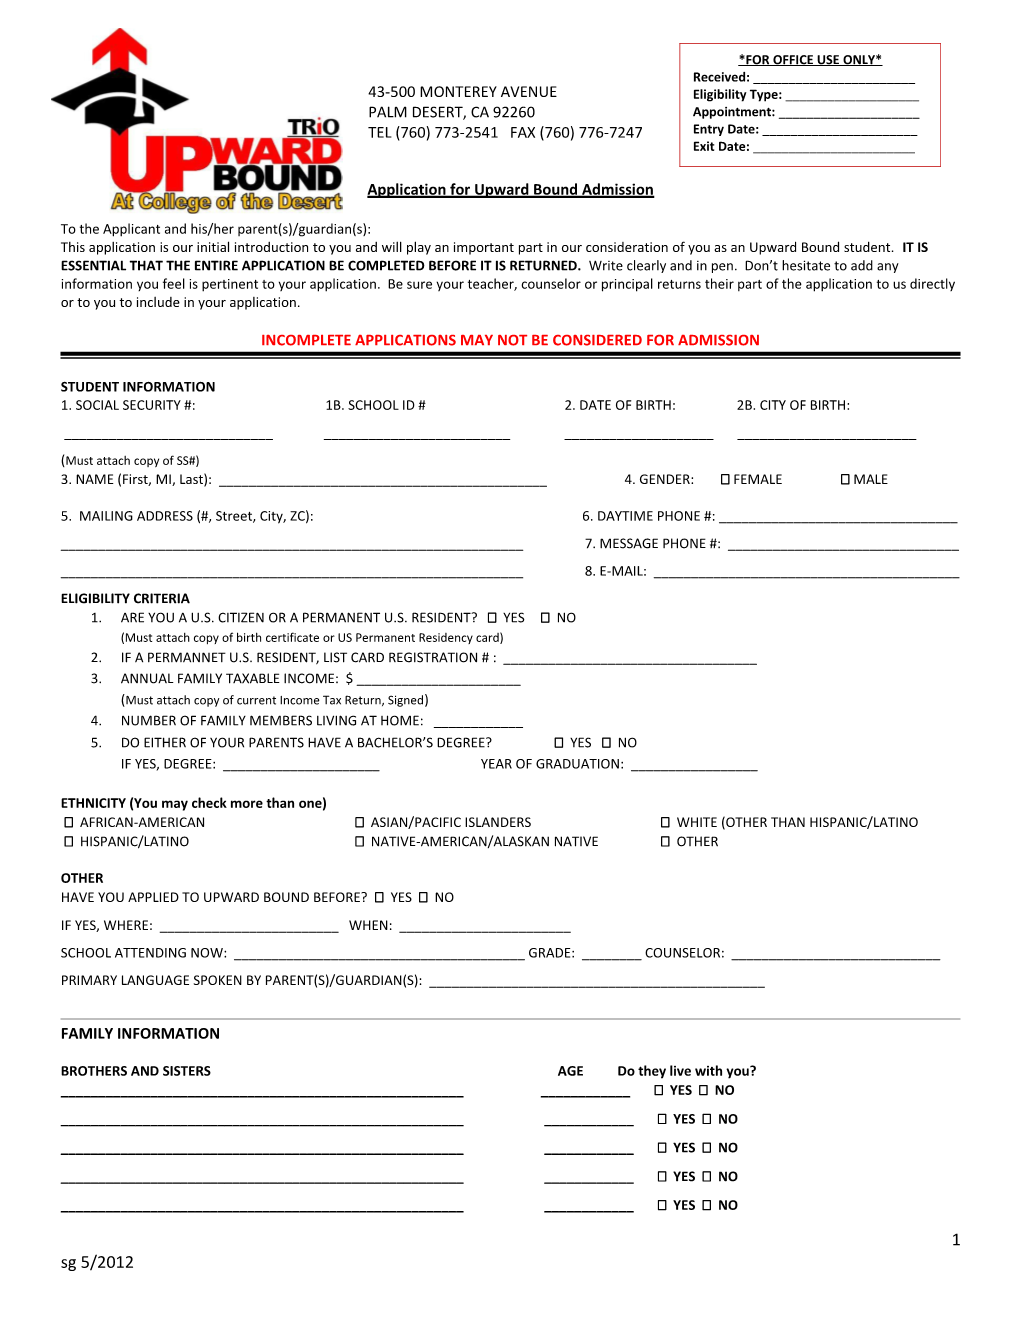 Application for Upward Bound Admission